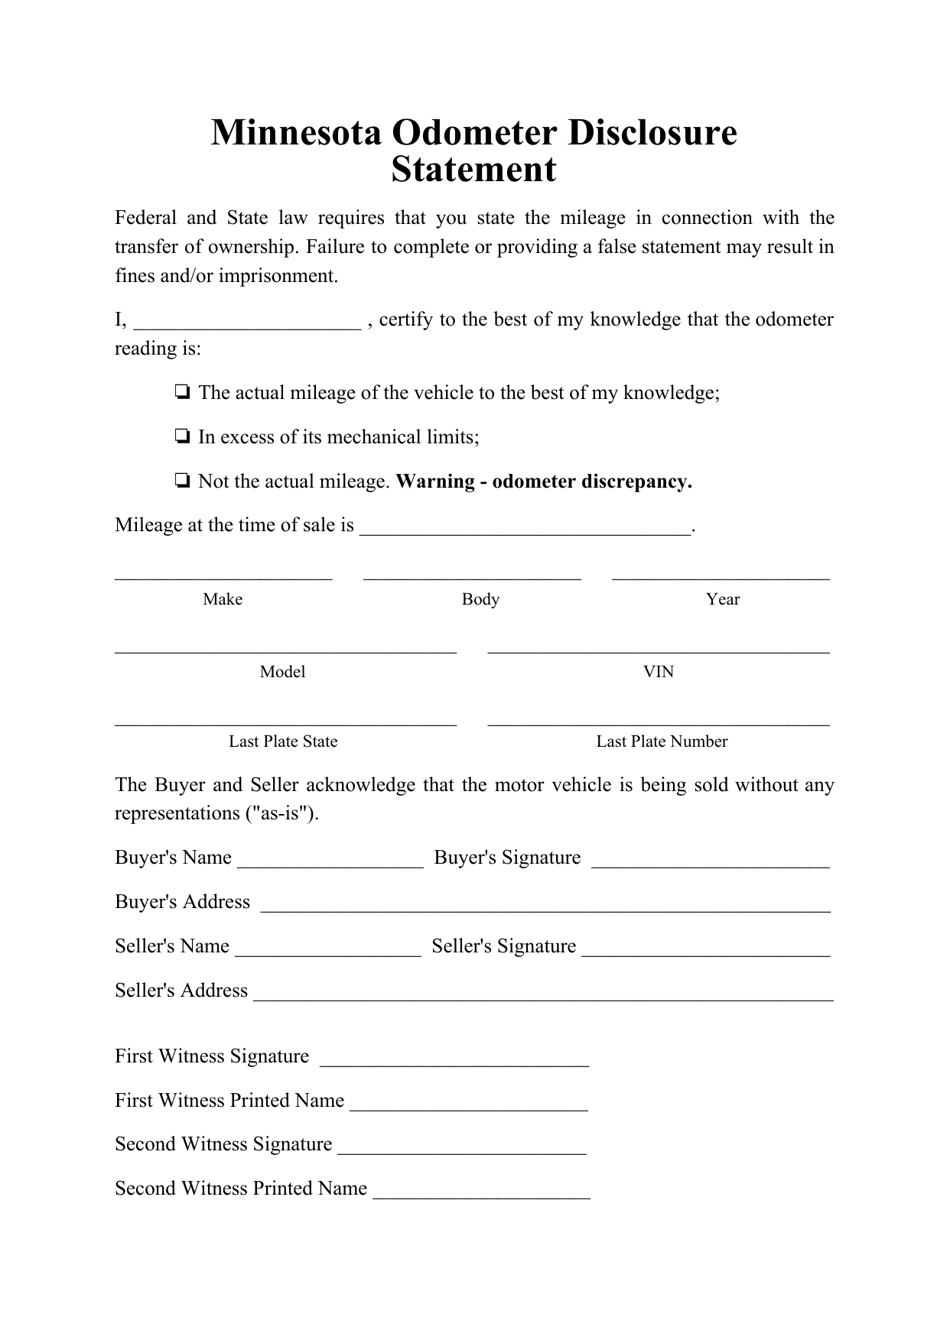 Odometer Disclosure Statement Form - Minnesota, Page 1